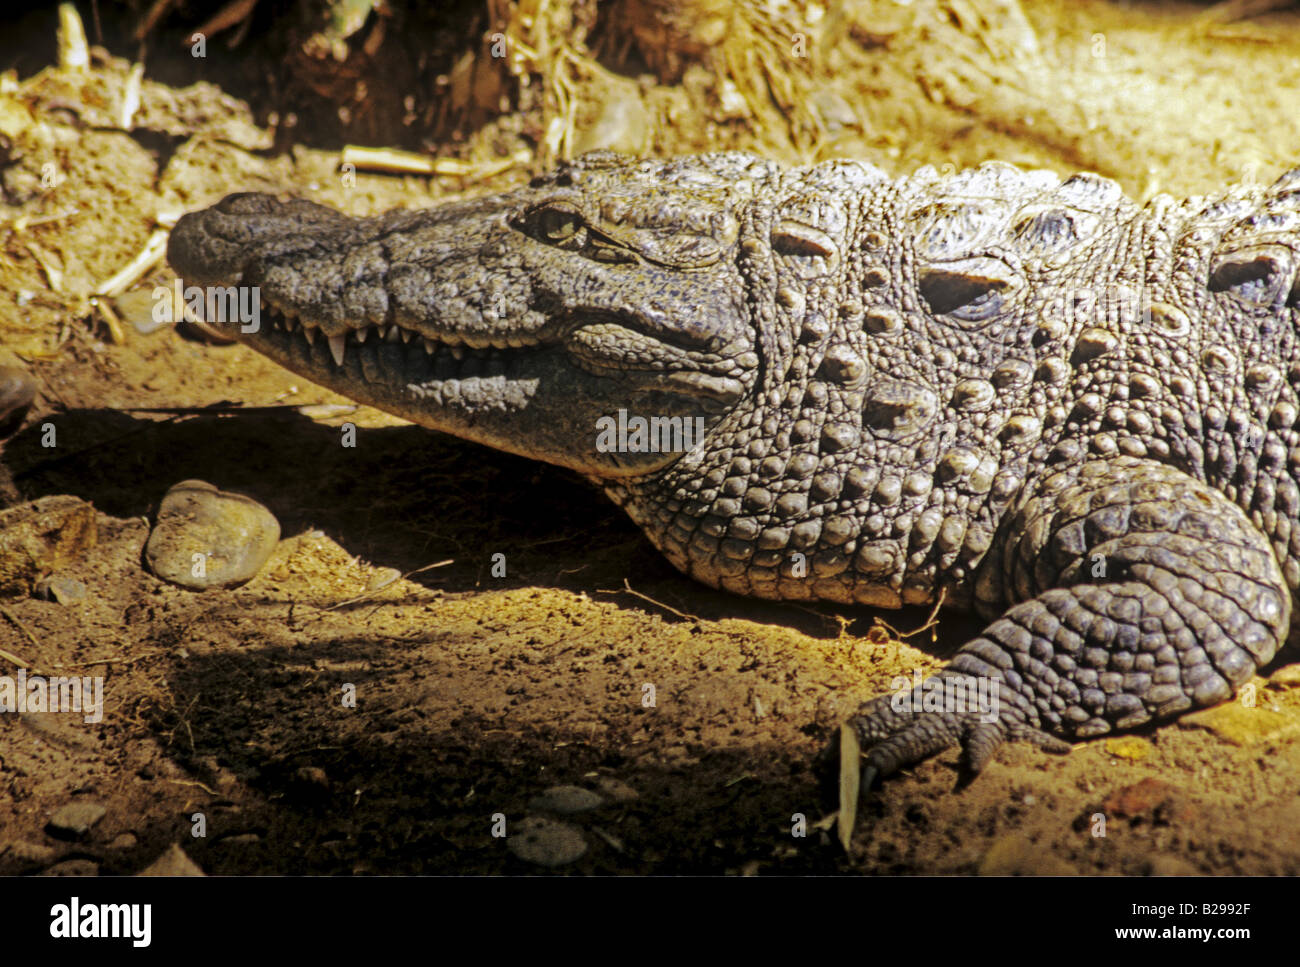 Esturine Crocodile Goa State India Date 15 06 2008 Ref ZB548 115573 0086 COMPULSORY CREDIT World Pictures Photoshot Stock Photo